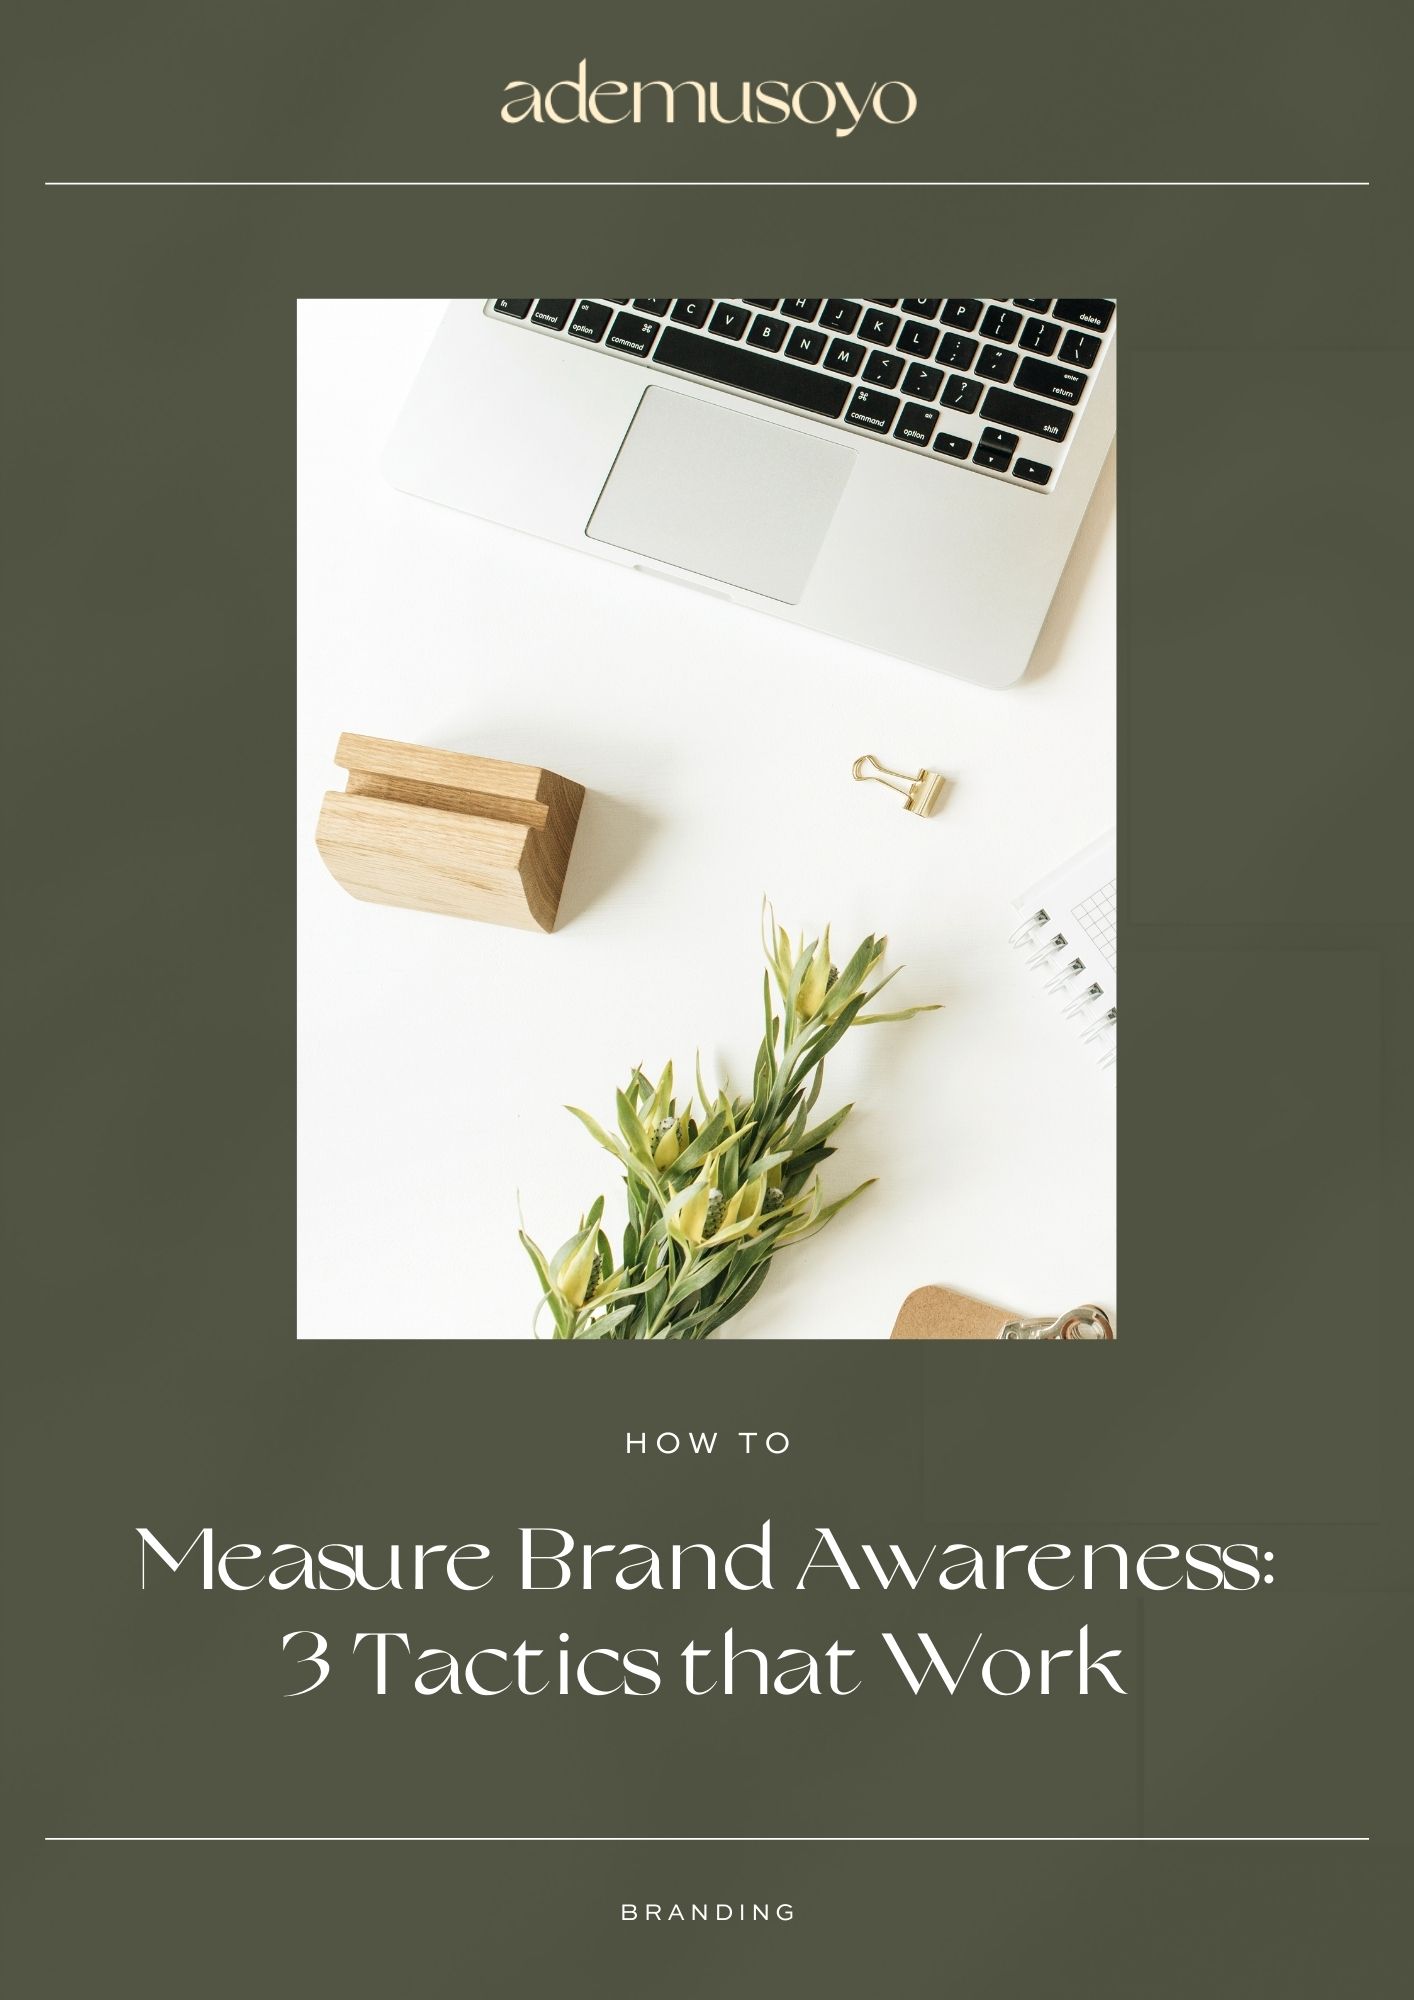 How To Measure Brand Awareness: 3 Tactics that Work